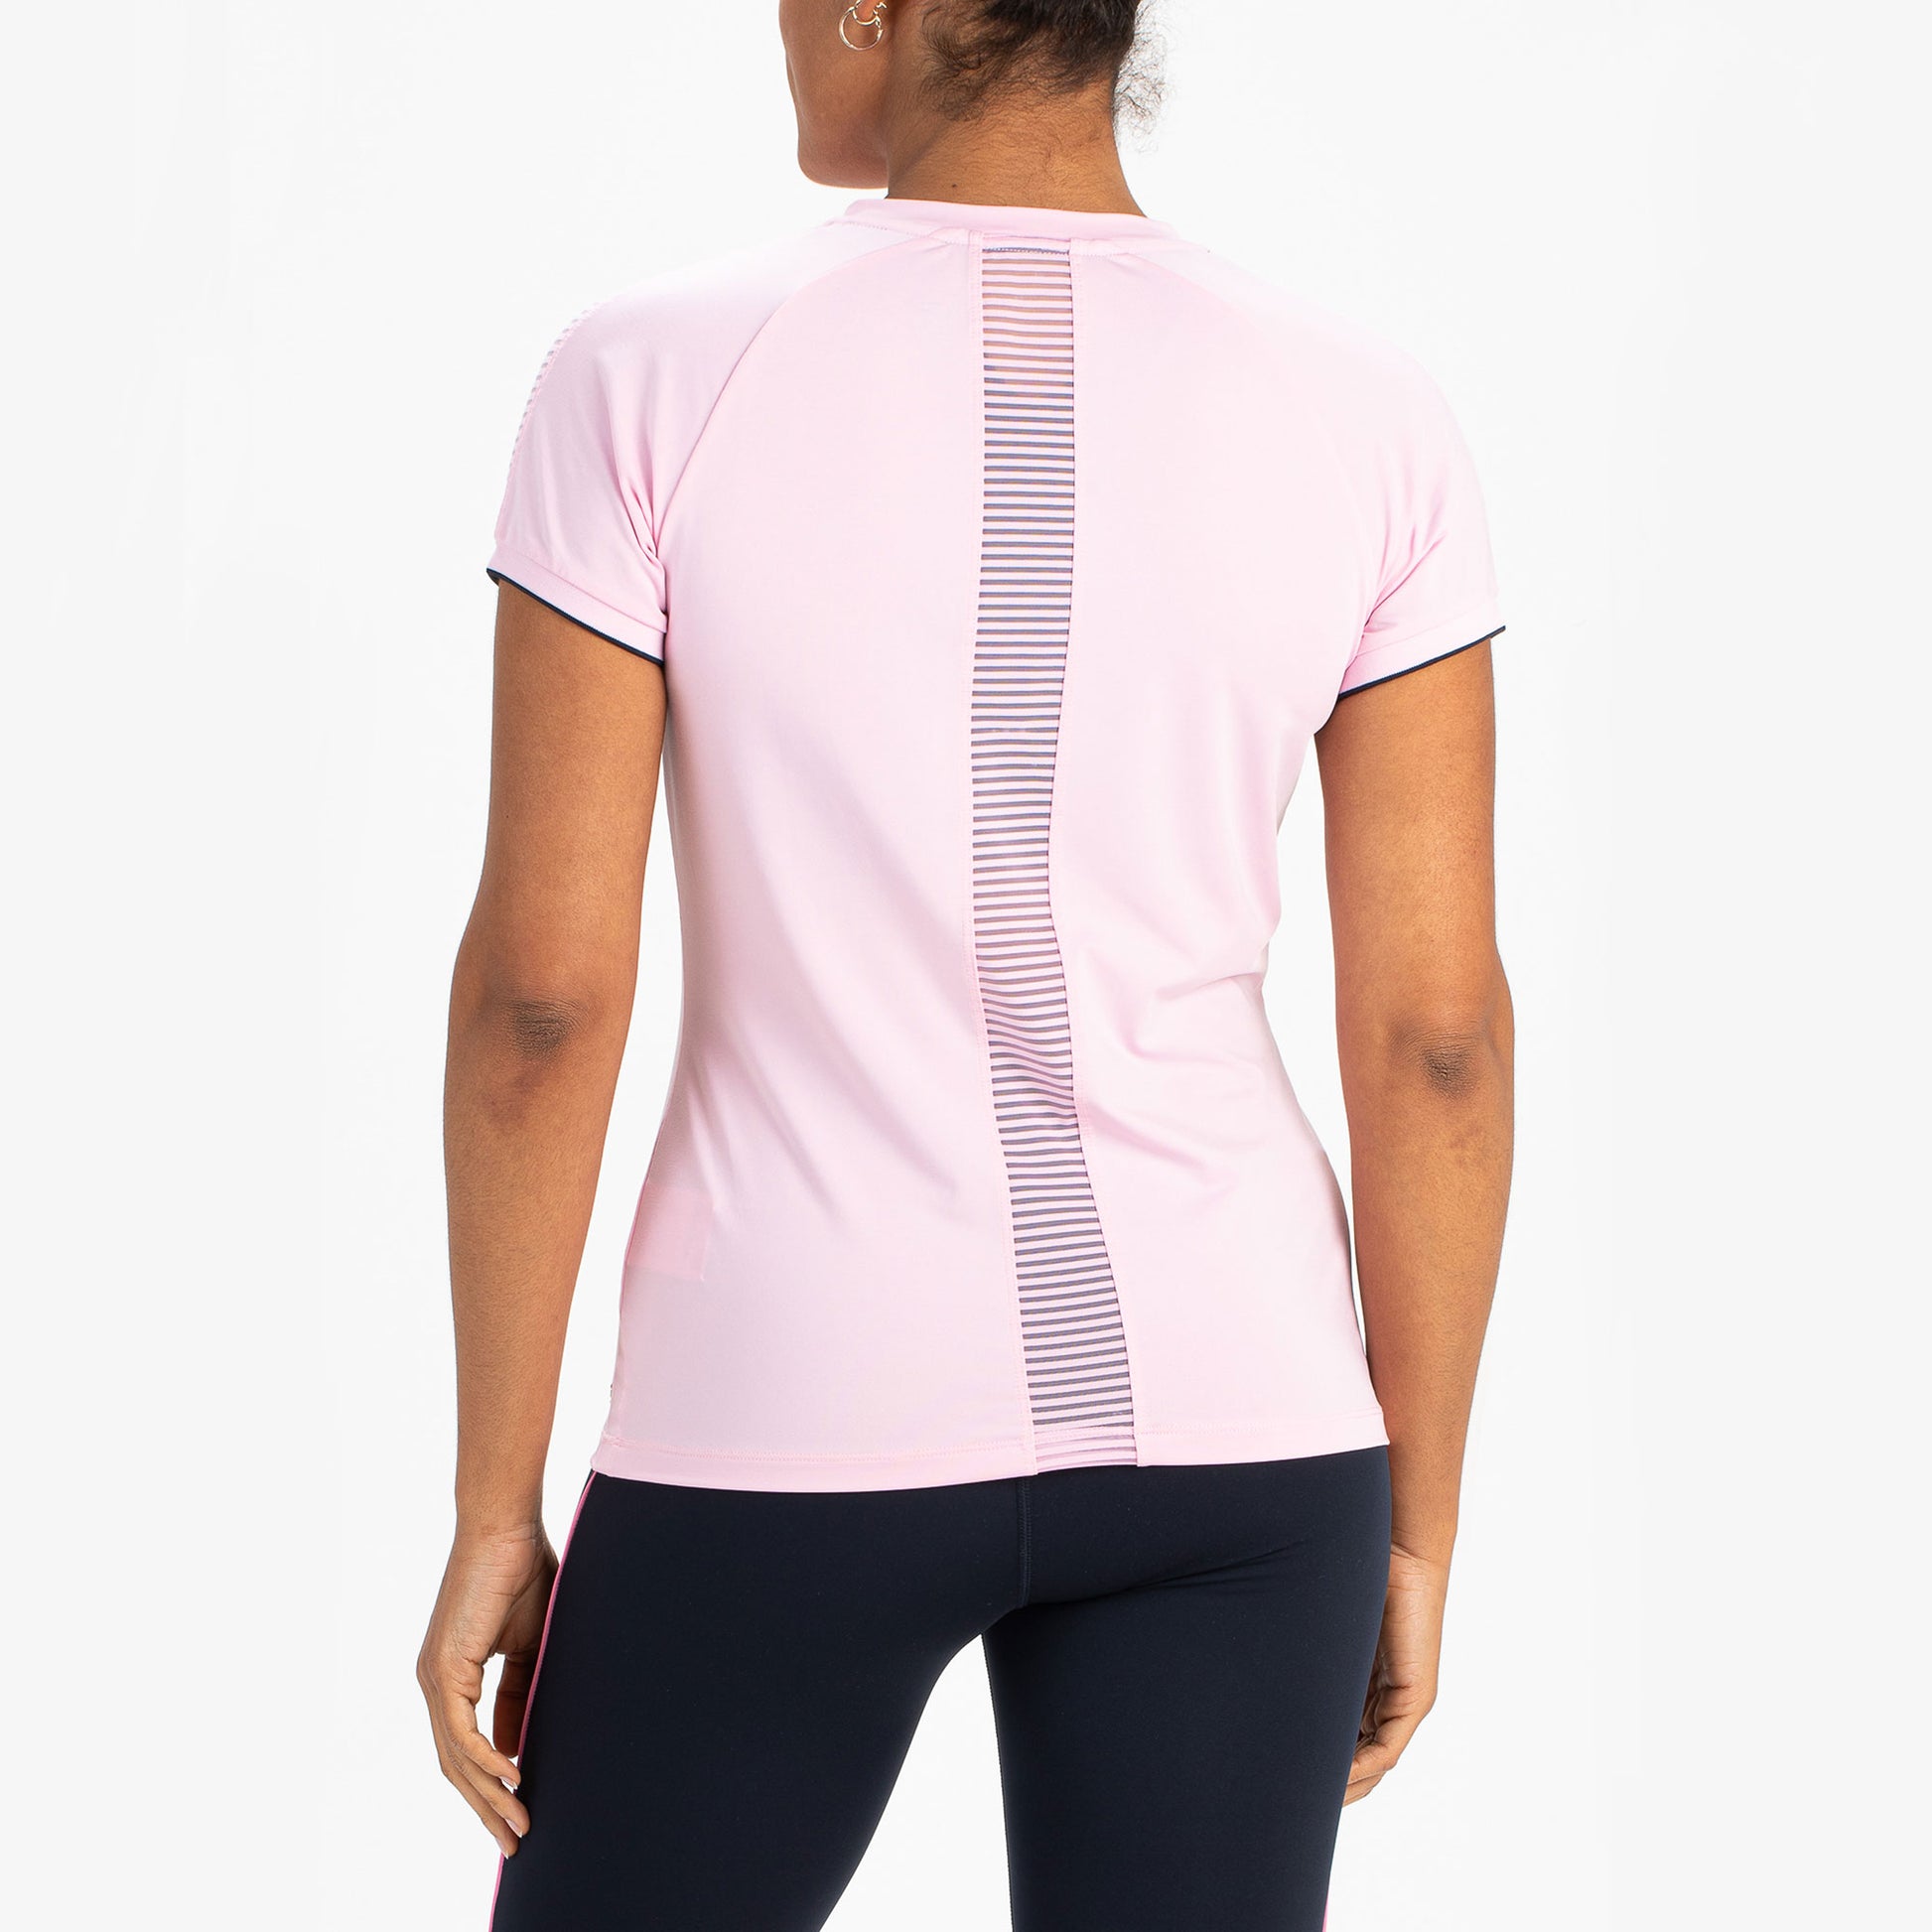 Sjeng Sports Halima Women's Tennis Shirt Pink (2)